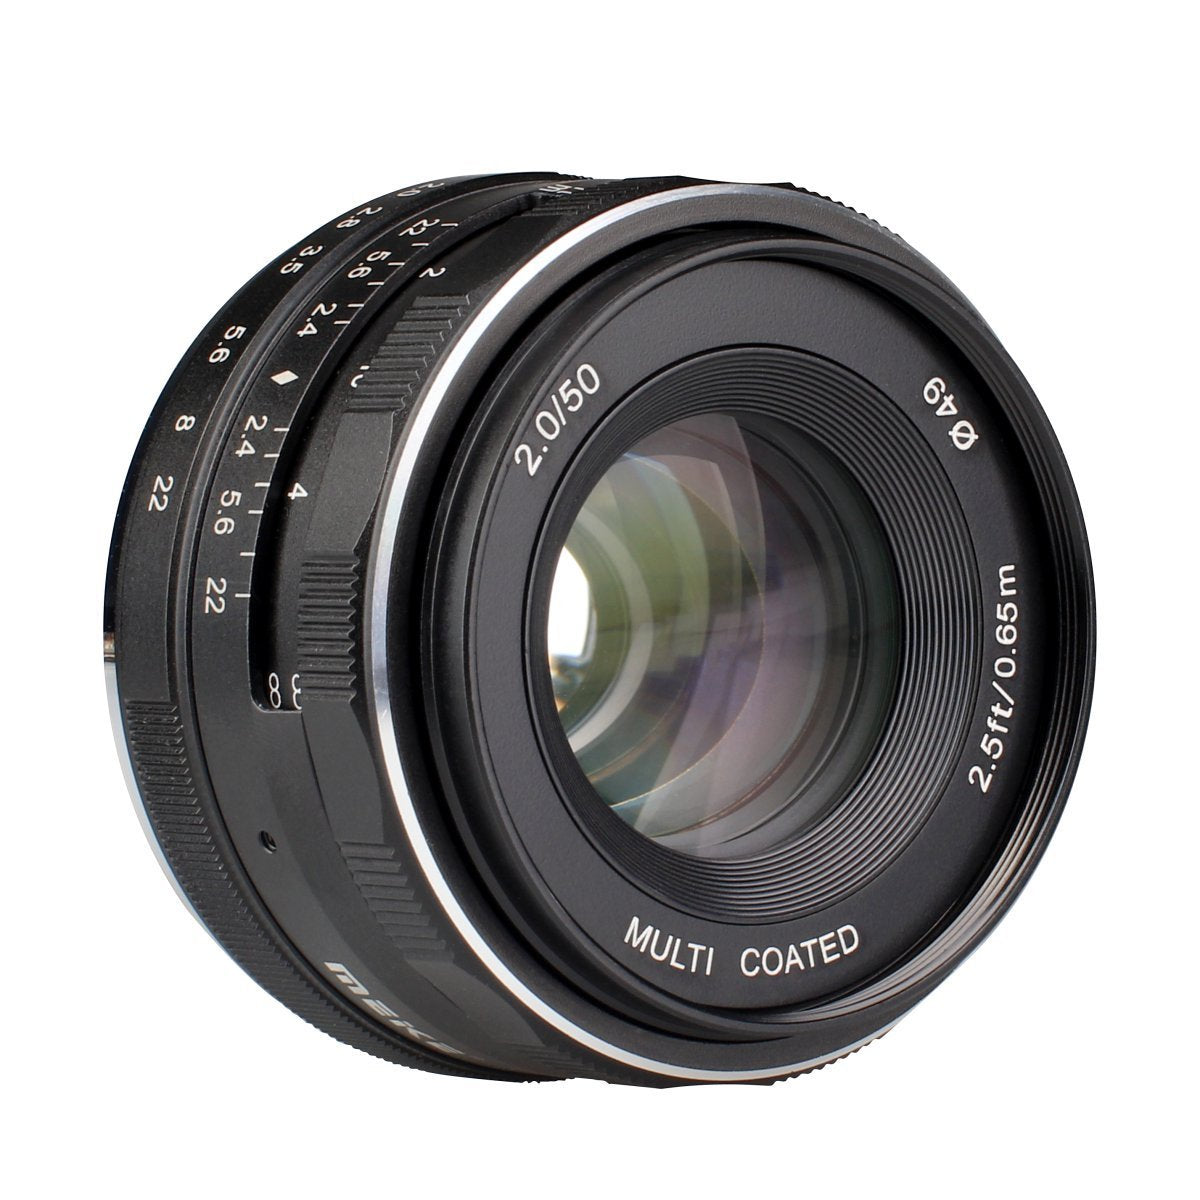 Meike MK-50mm 50mm f/2.0 Manual Focus Fixed Lens for Fujifilm-FX Mount Digital Cameras (X-A1/A2,X-e1/e2/e2s,X-M1,X-T1/T10,X-pro1/pro2 etc)